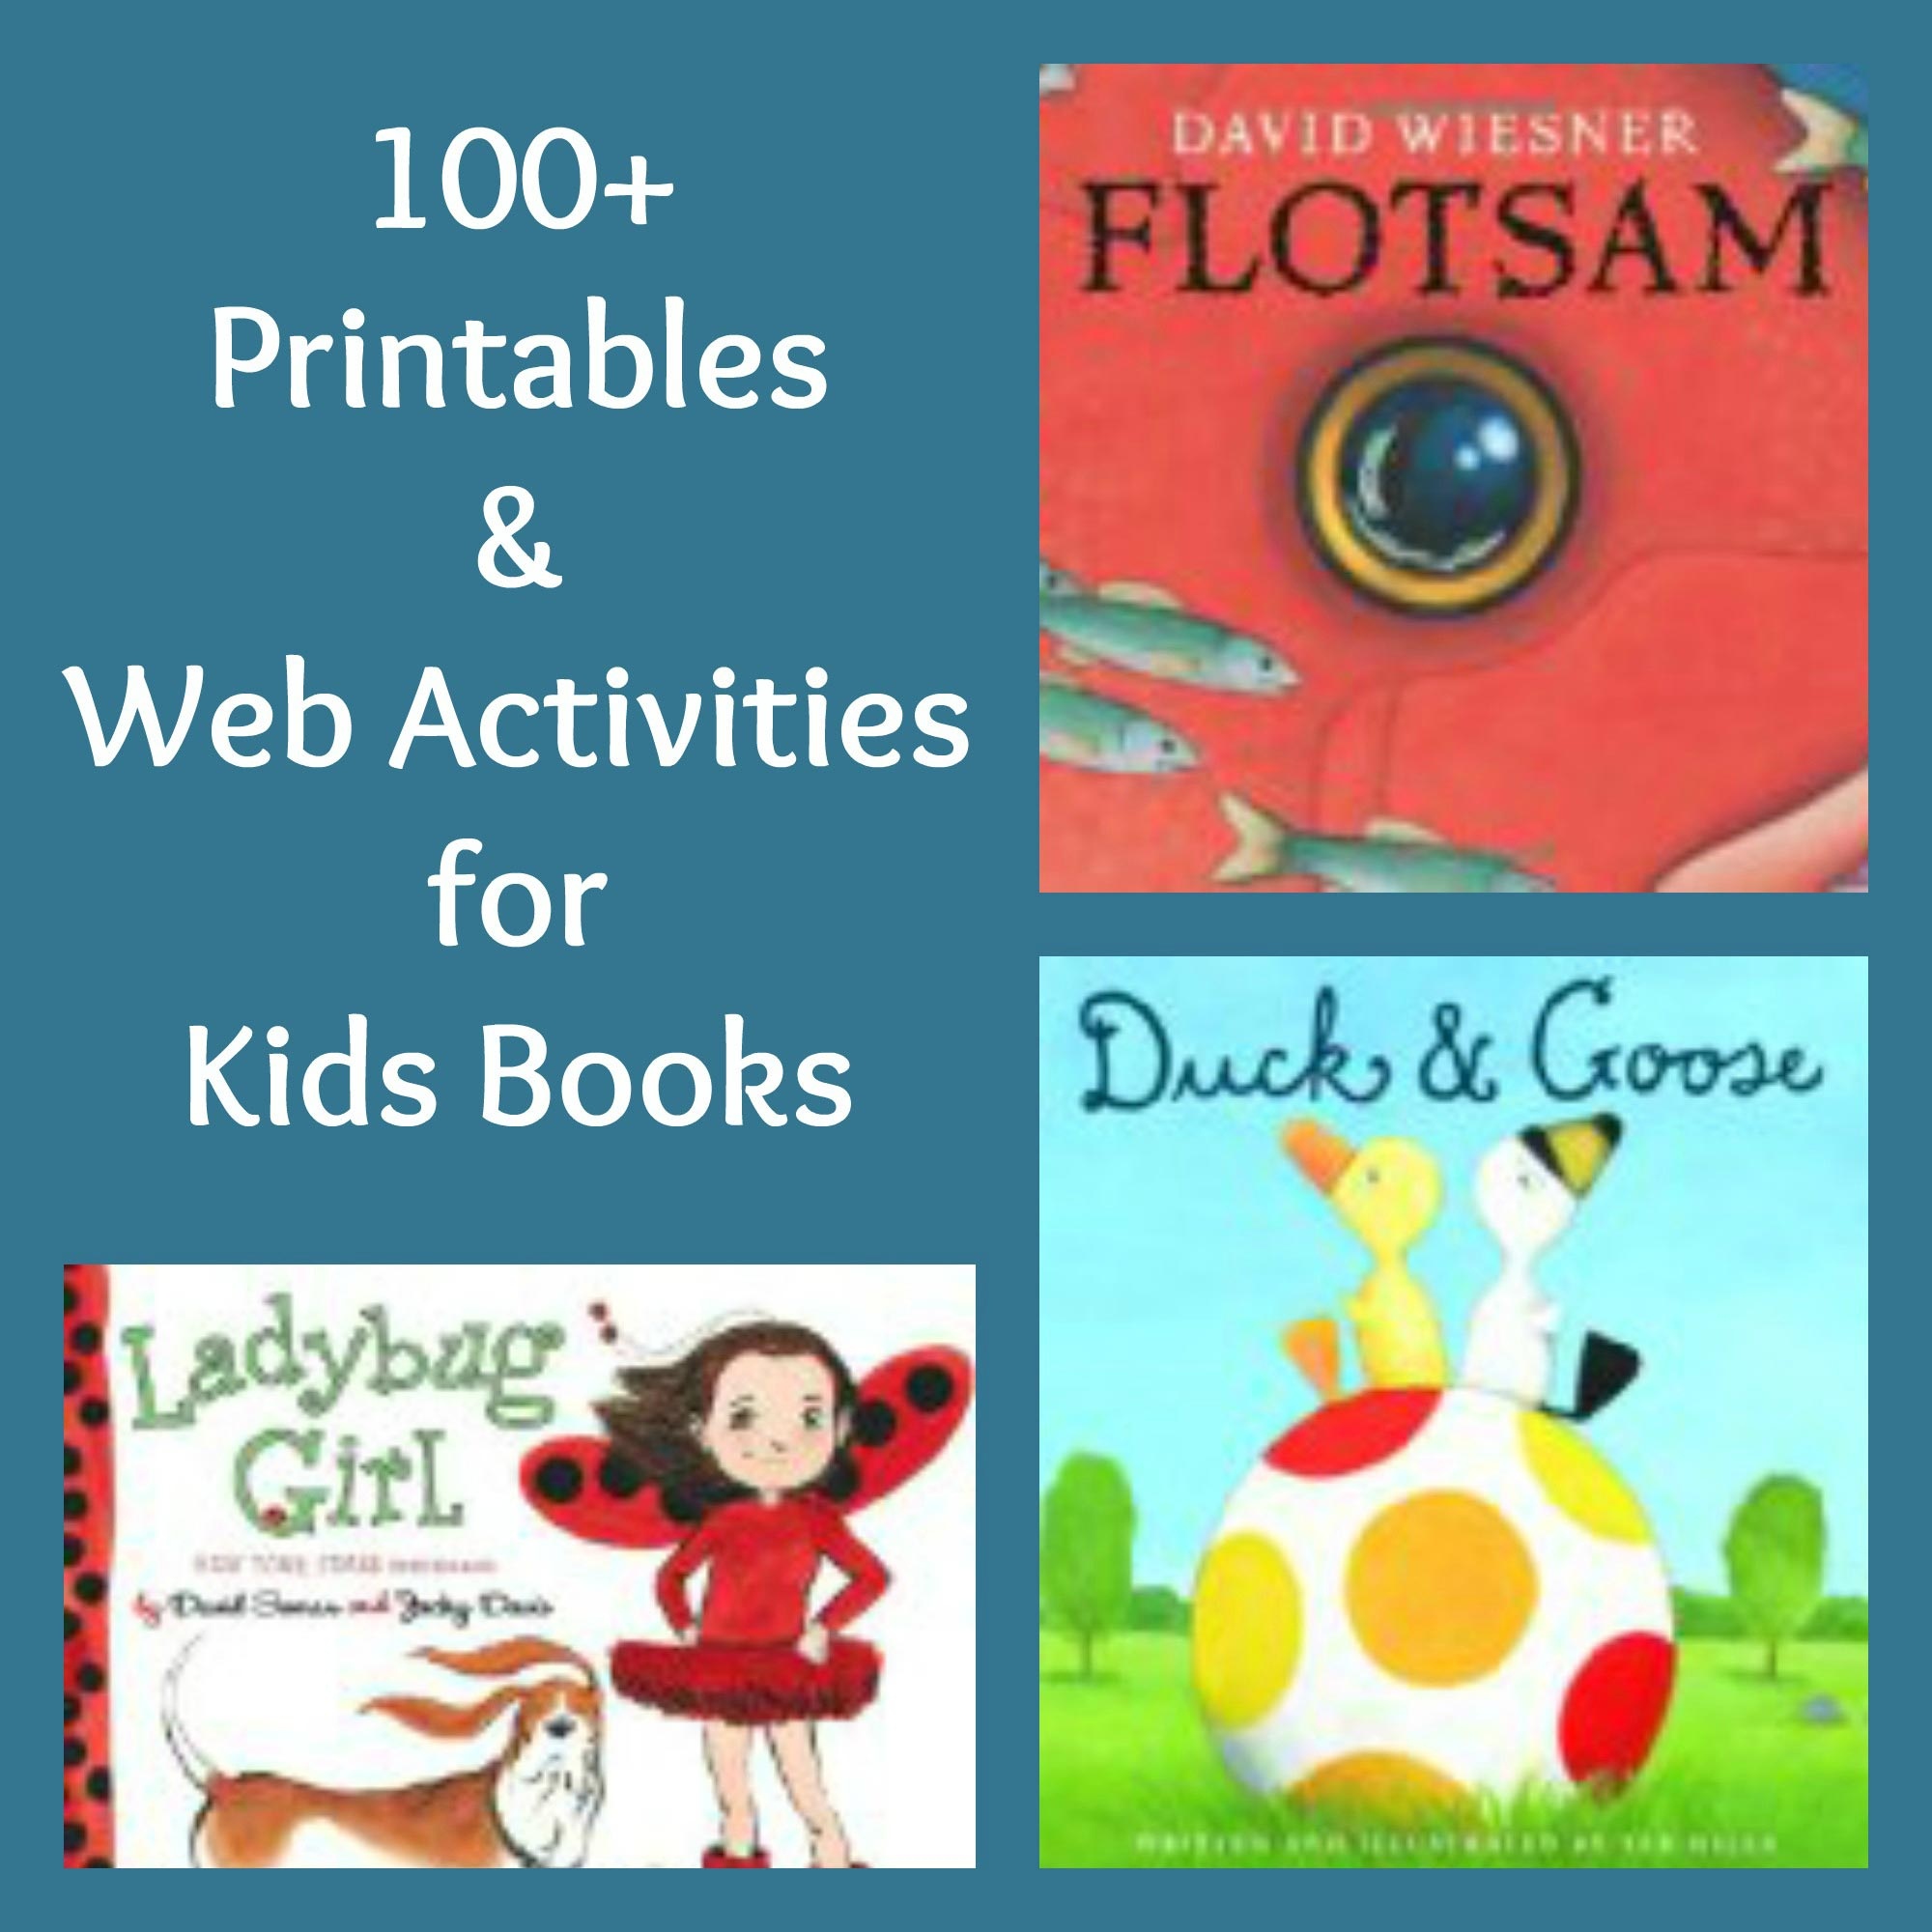 50+ Free Read Aloud Books Online - Edventures With Kids - Free Printable Stories For Preschoolers